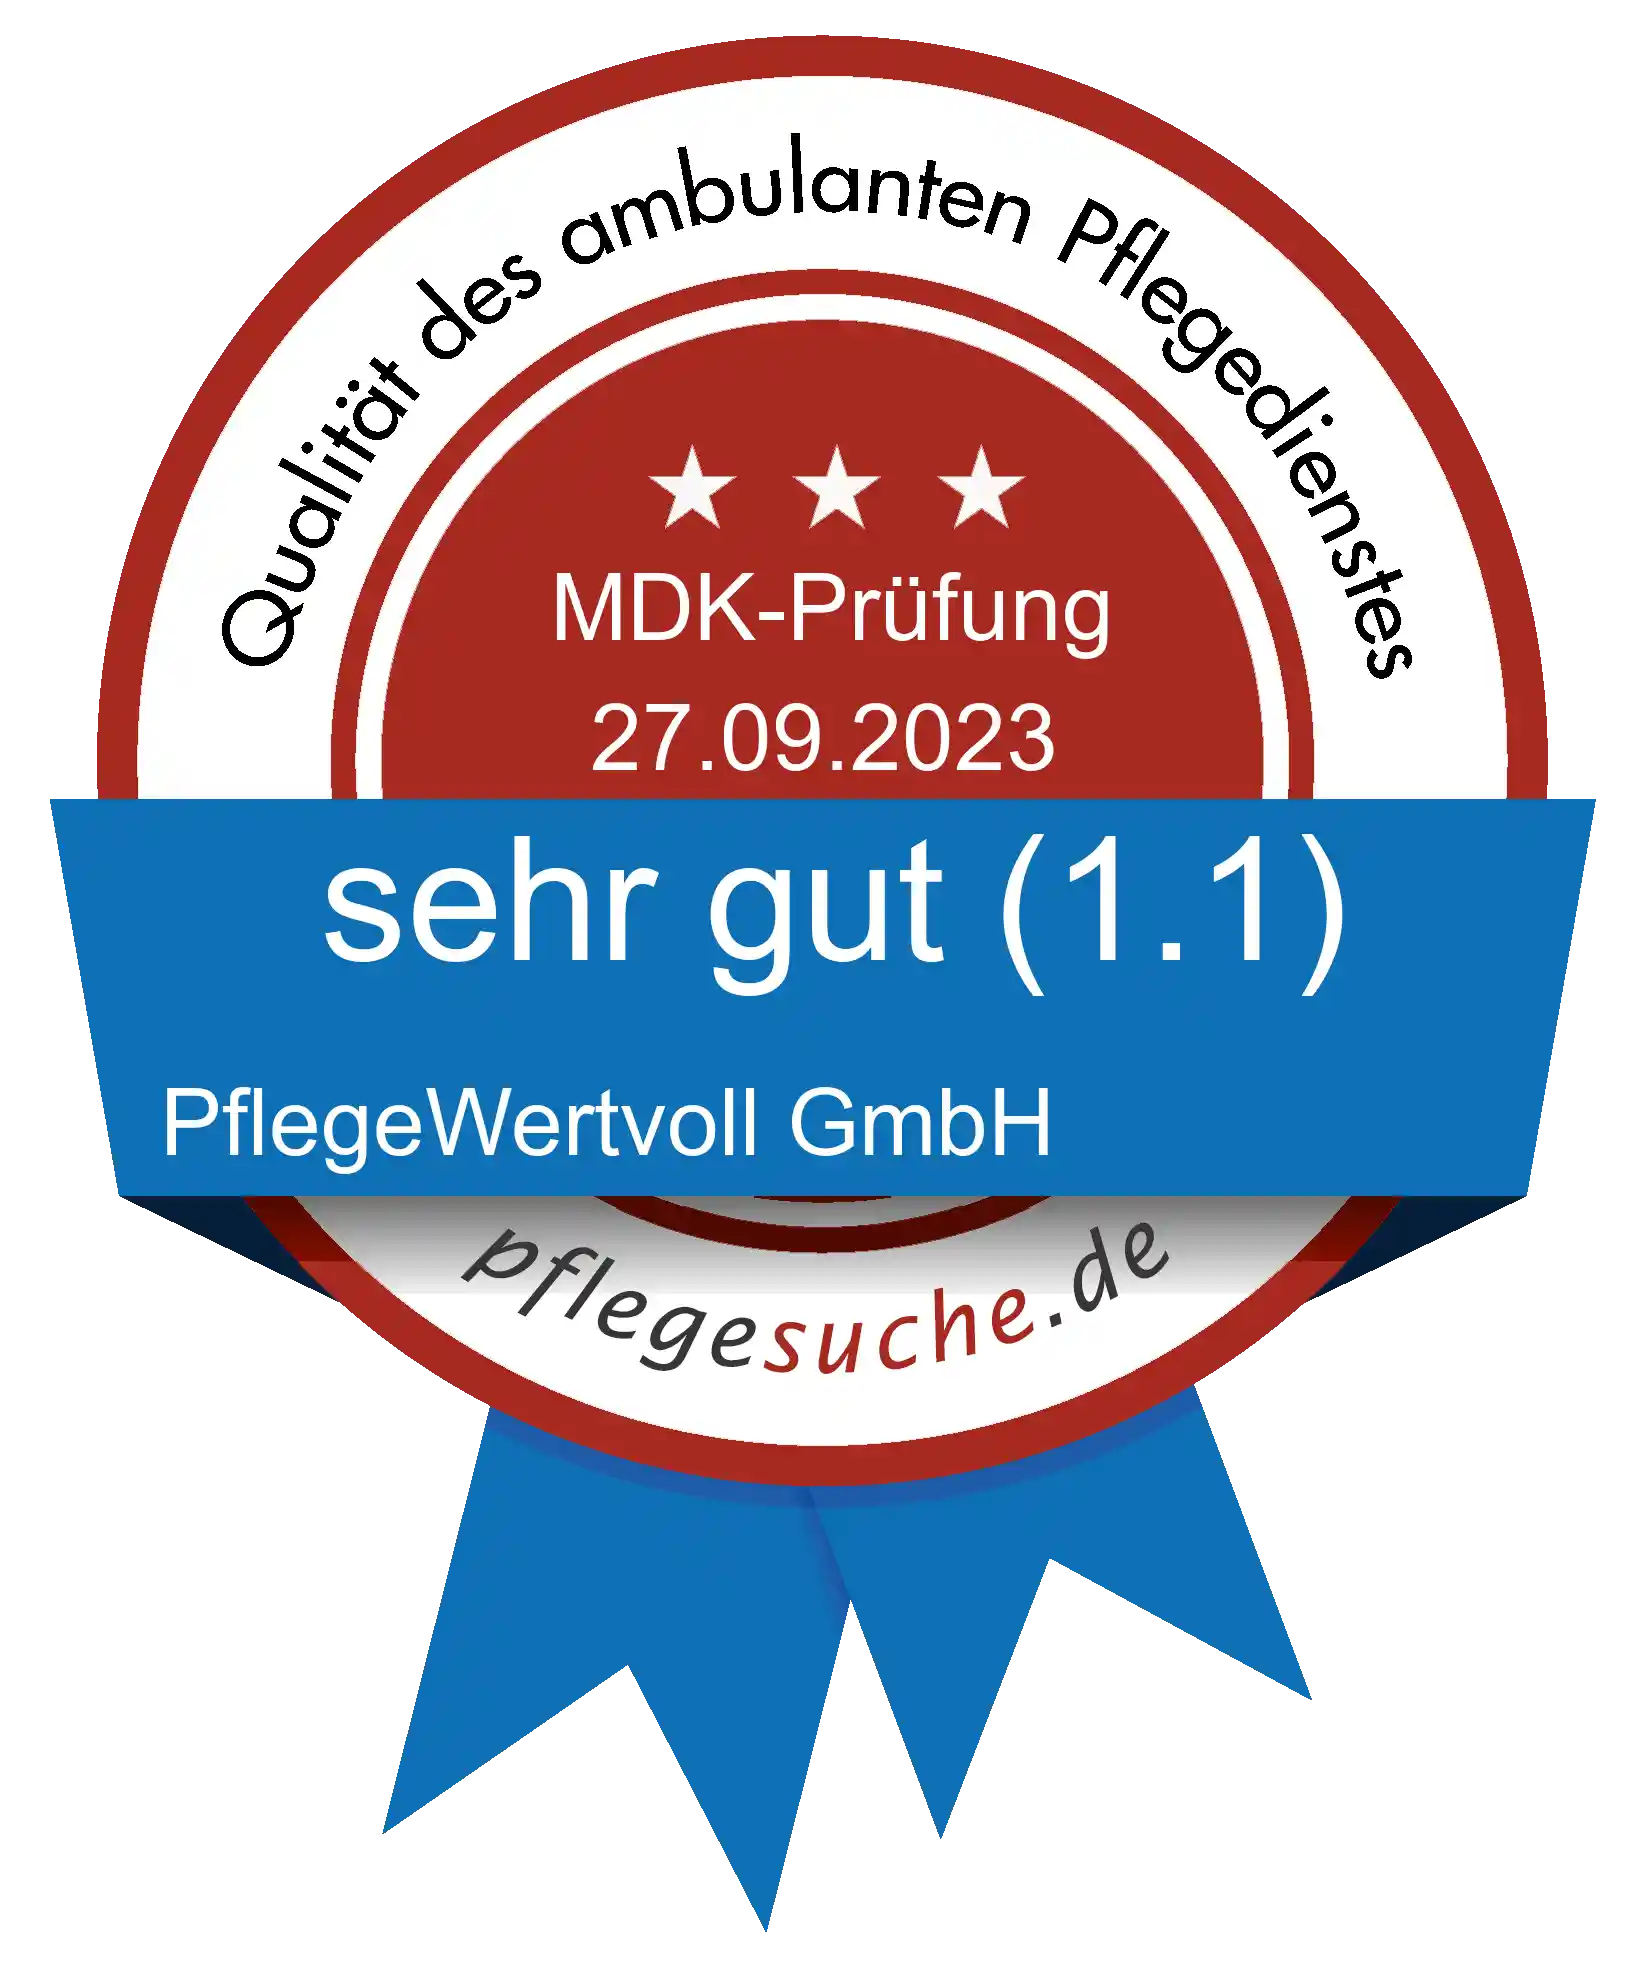 Siegel Benotung: PflegeWertvoll GmbH